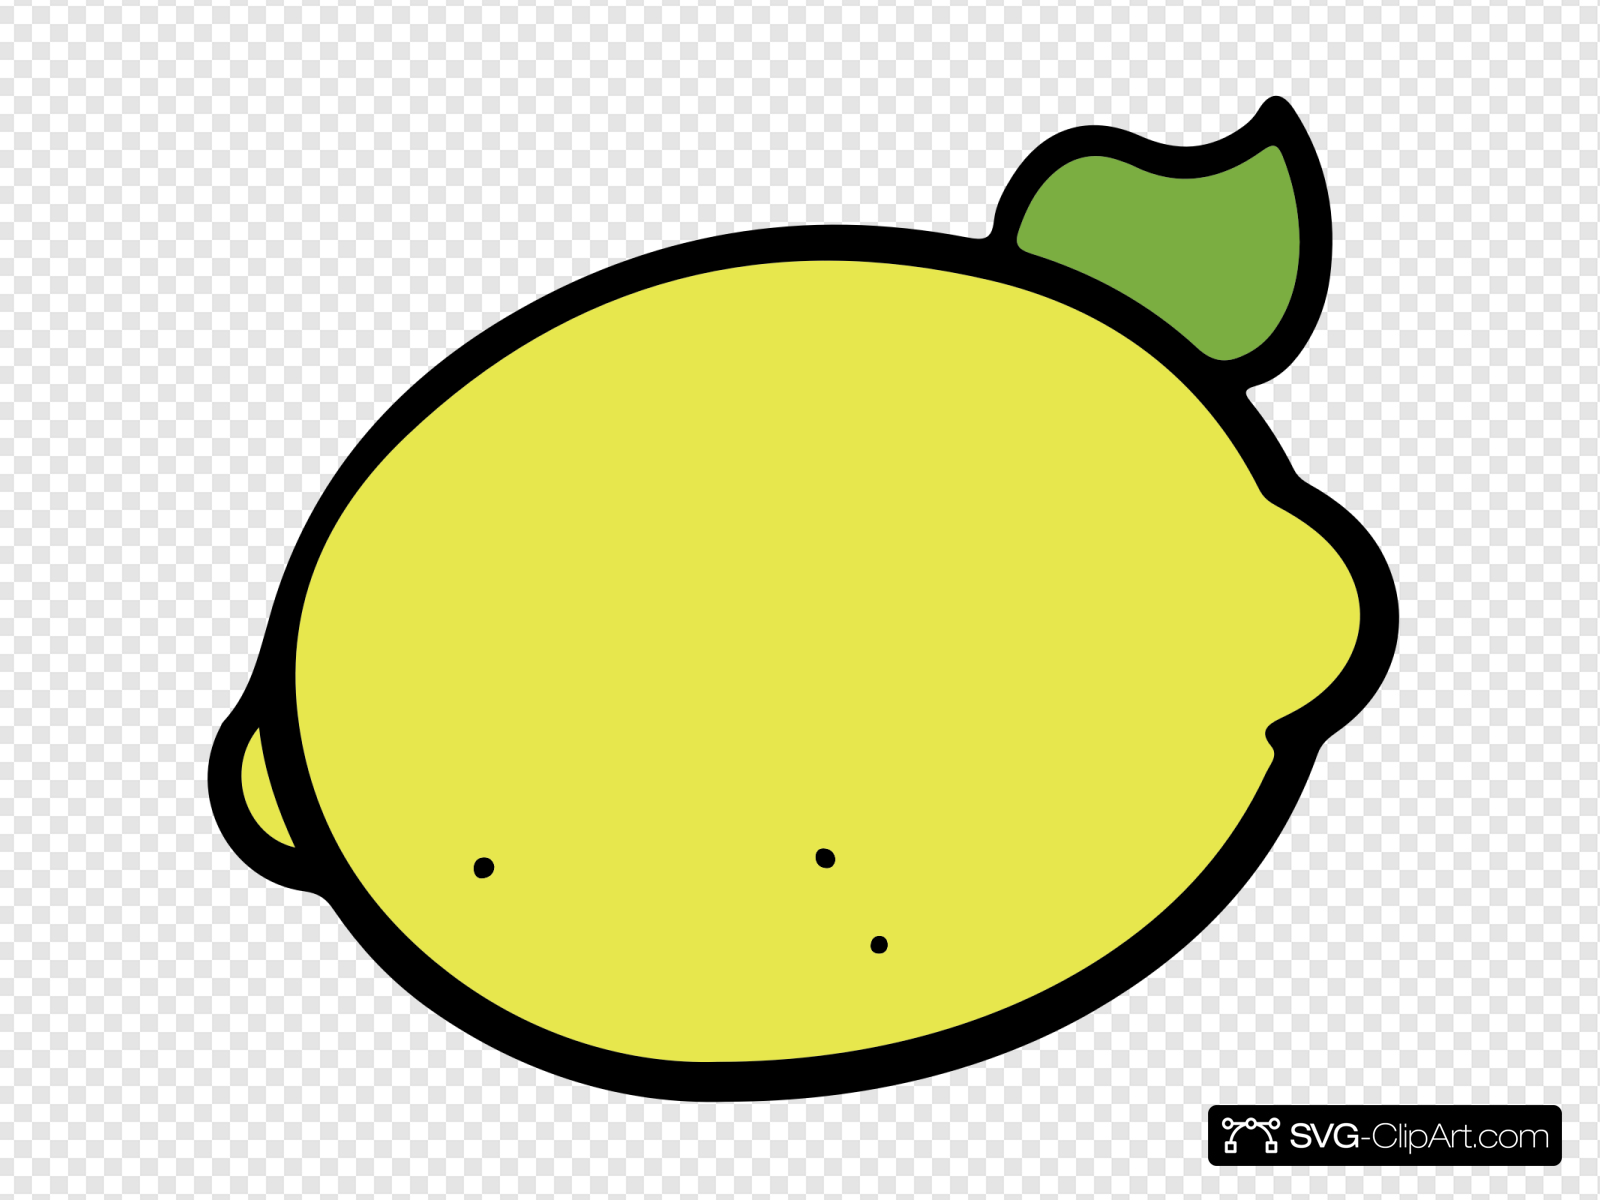 Yellow Lemon Clip art, Icon and SVG